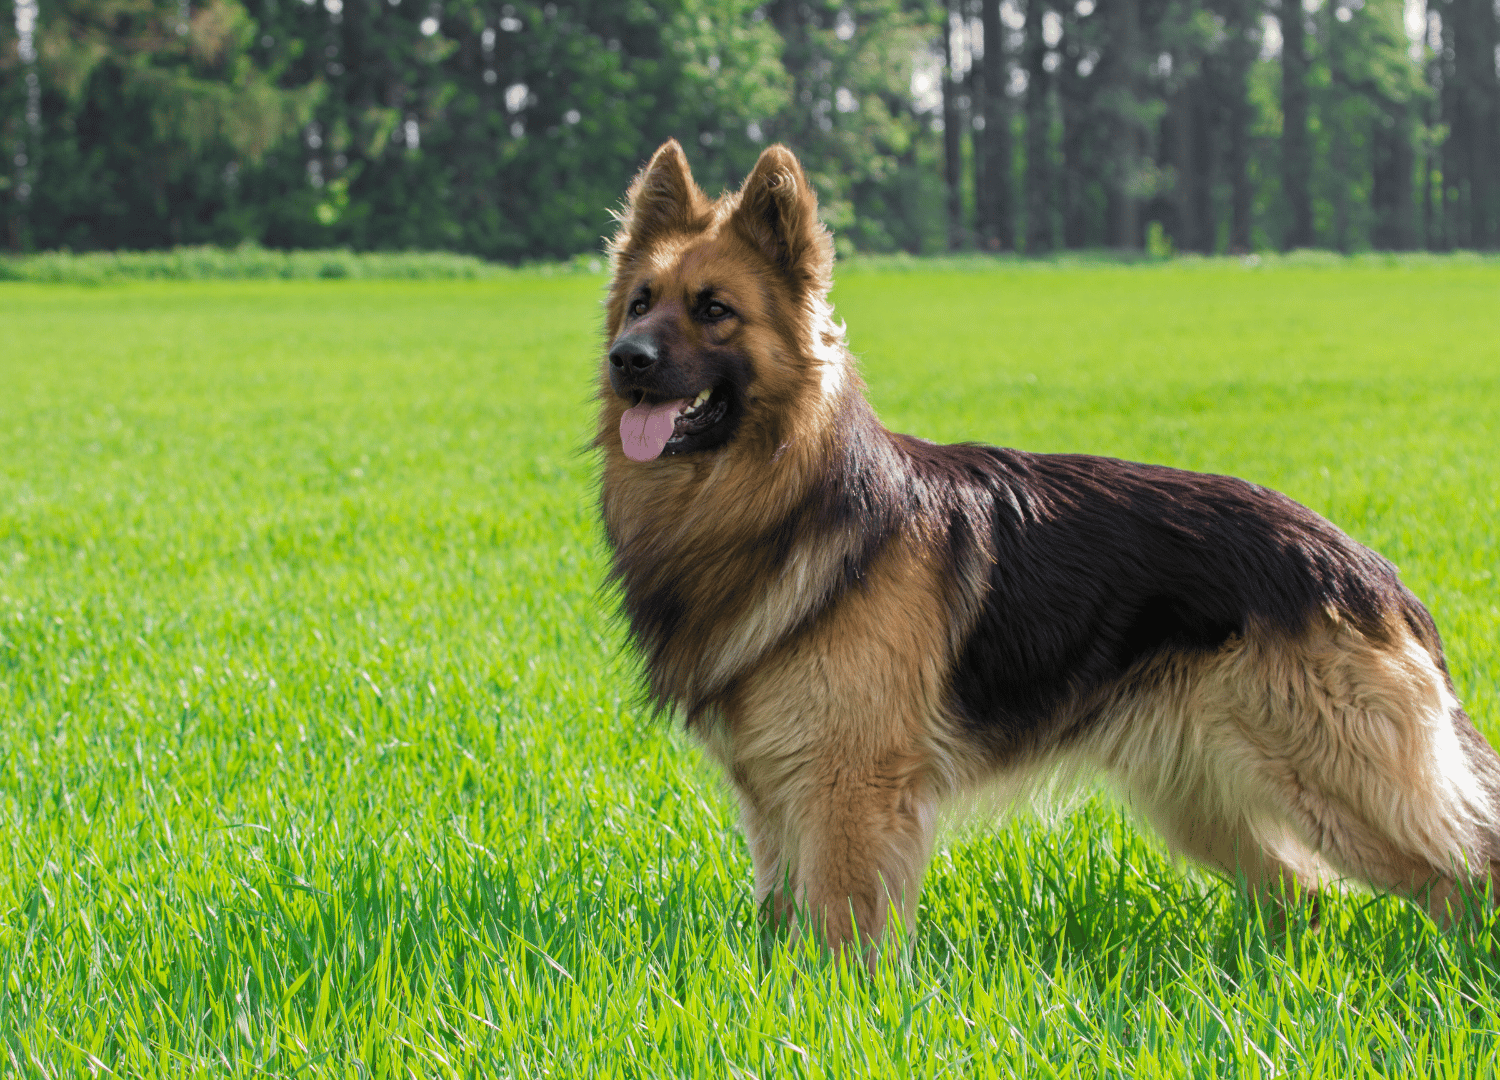 Dogs That Look Like German Shepherds - King Shepherd